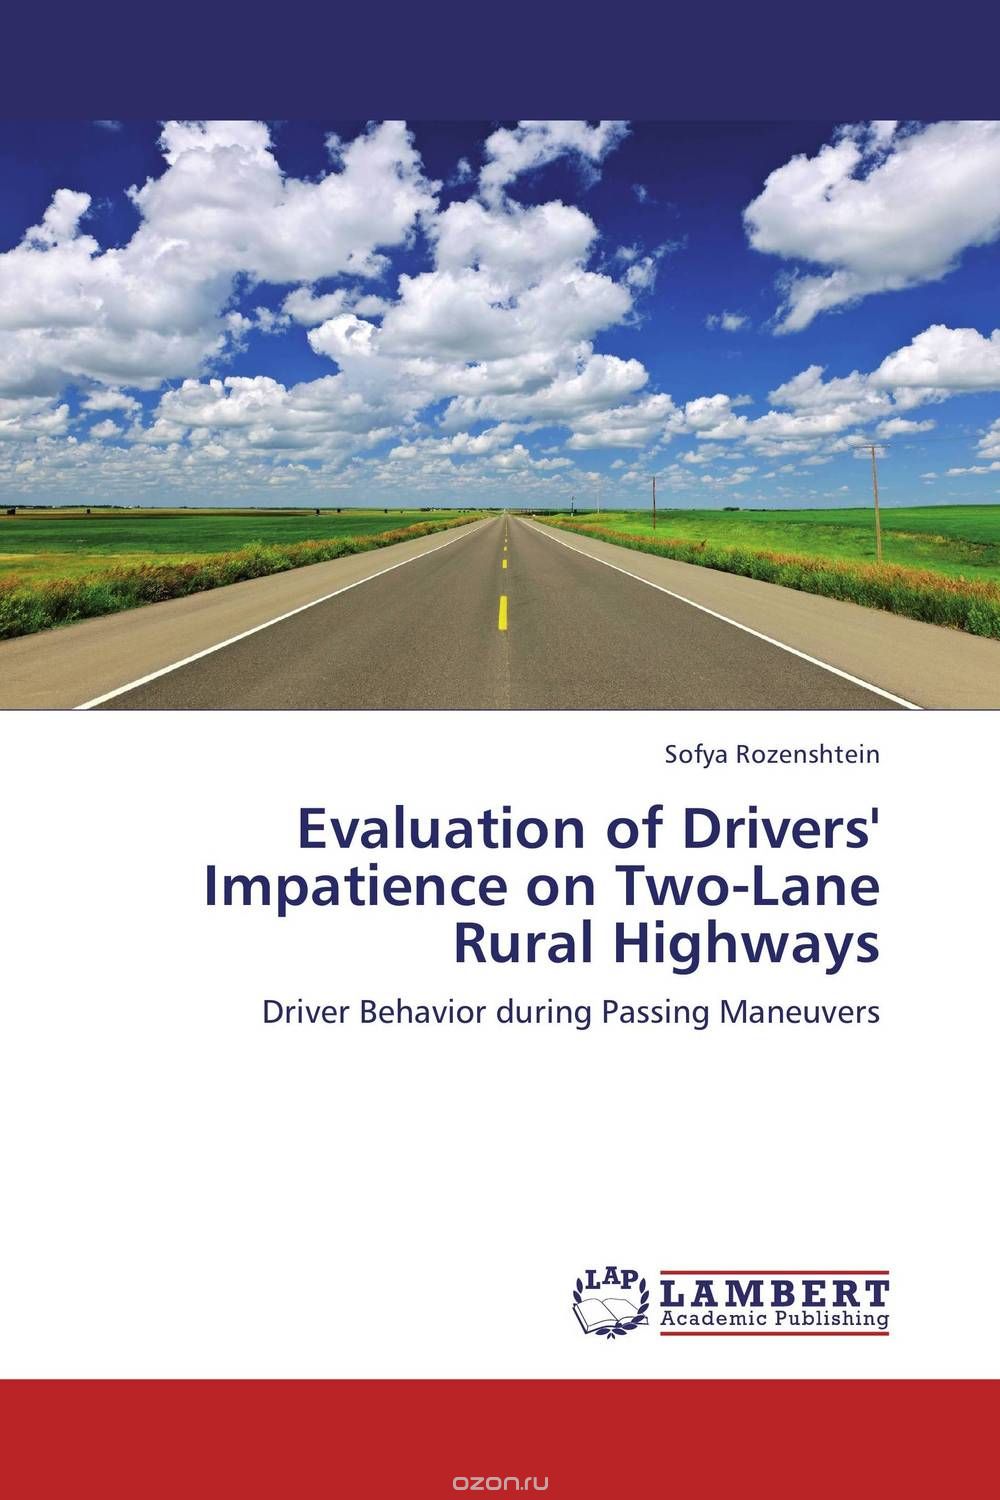 Скачать книгу "Evaluation of Drivers' Impatience on Two-Lane Rural Highways"